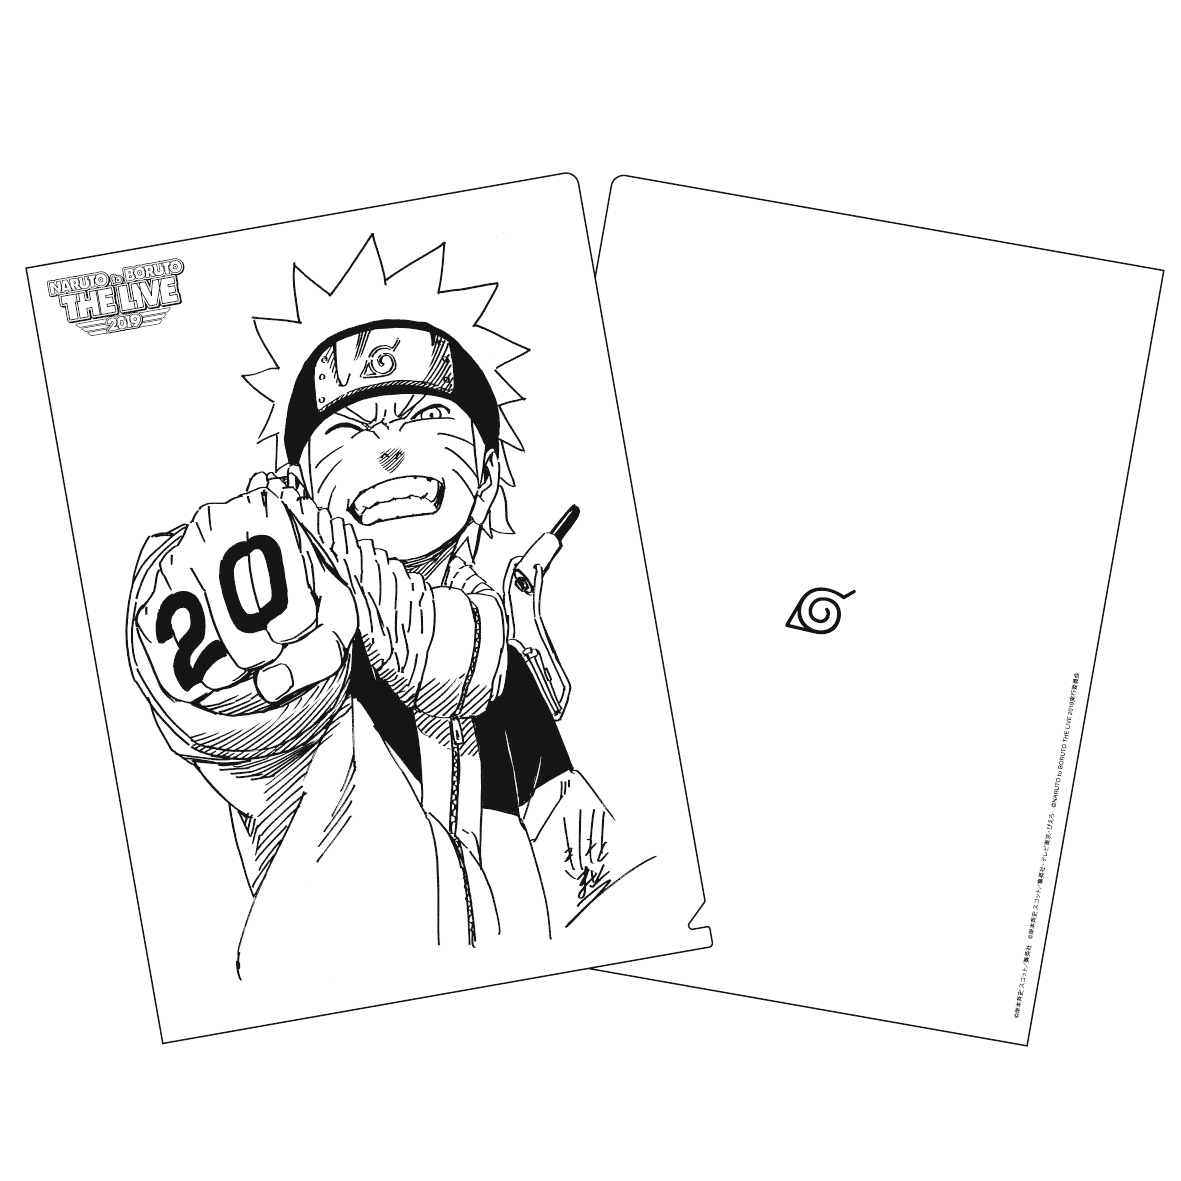 Naruto ナルト 周年記念 岸本斉史描き下ろしイラストグッズを ナルボルライブ19 で販売決定 チケットは完売間近 オタ女